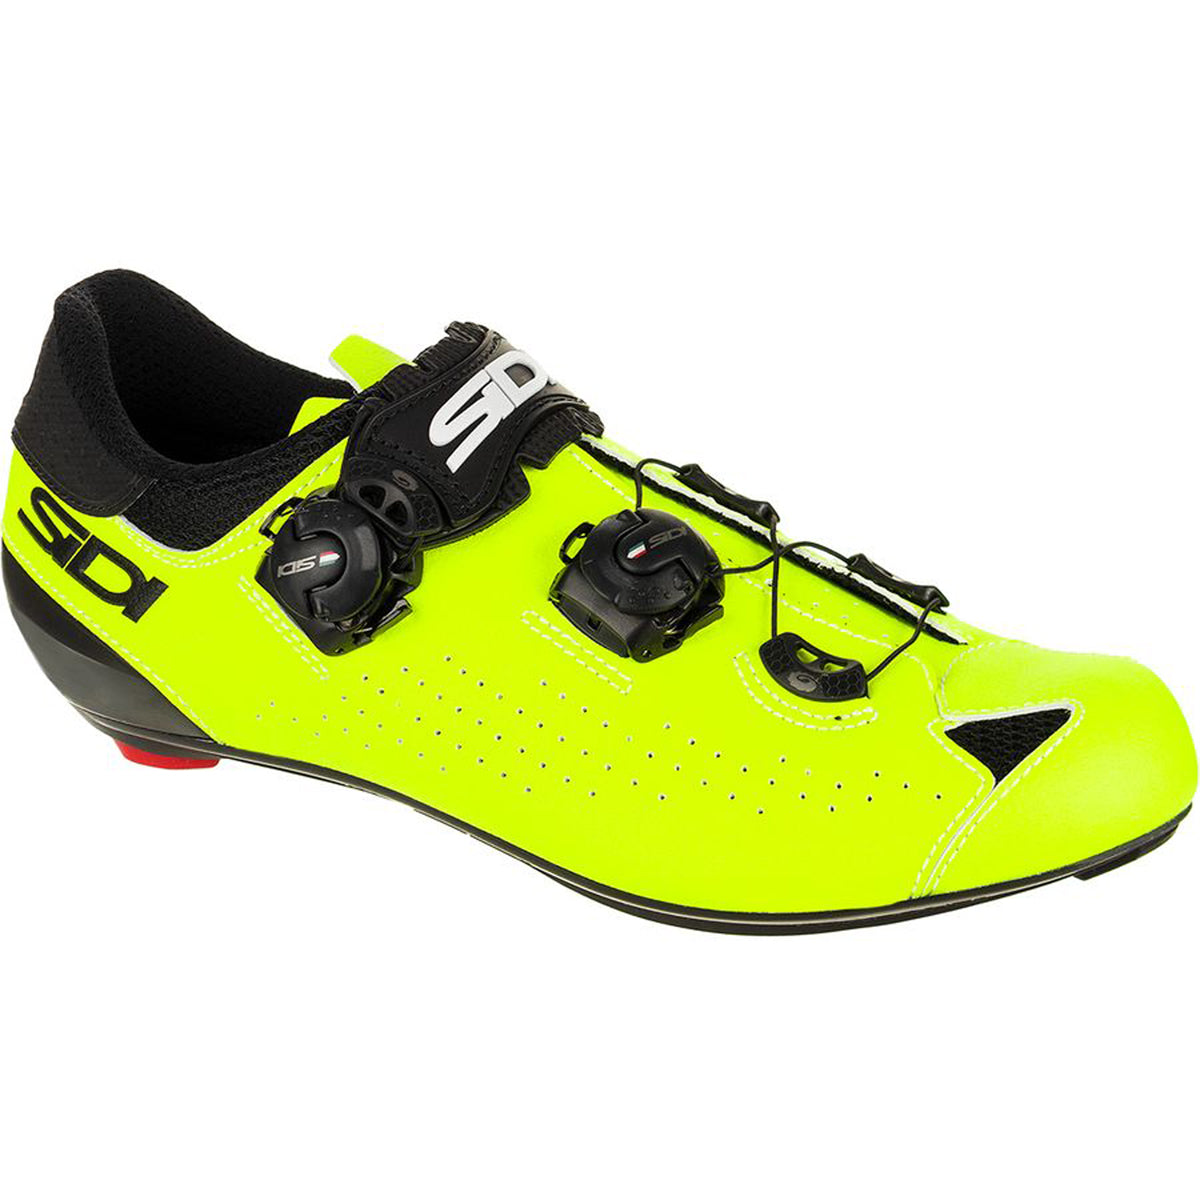 Sidi Genius 10 Road Bicycle Shoes - Black/Yellow Fluo